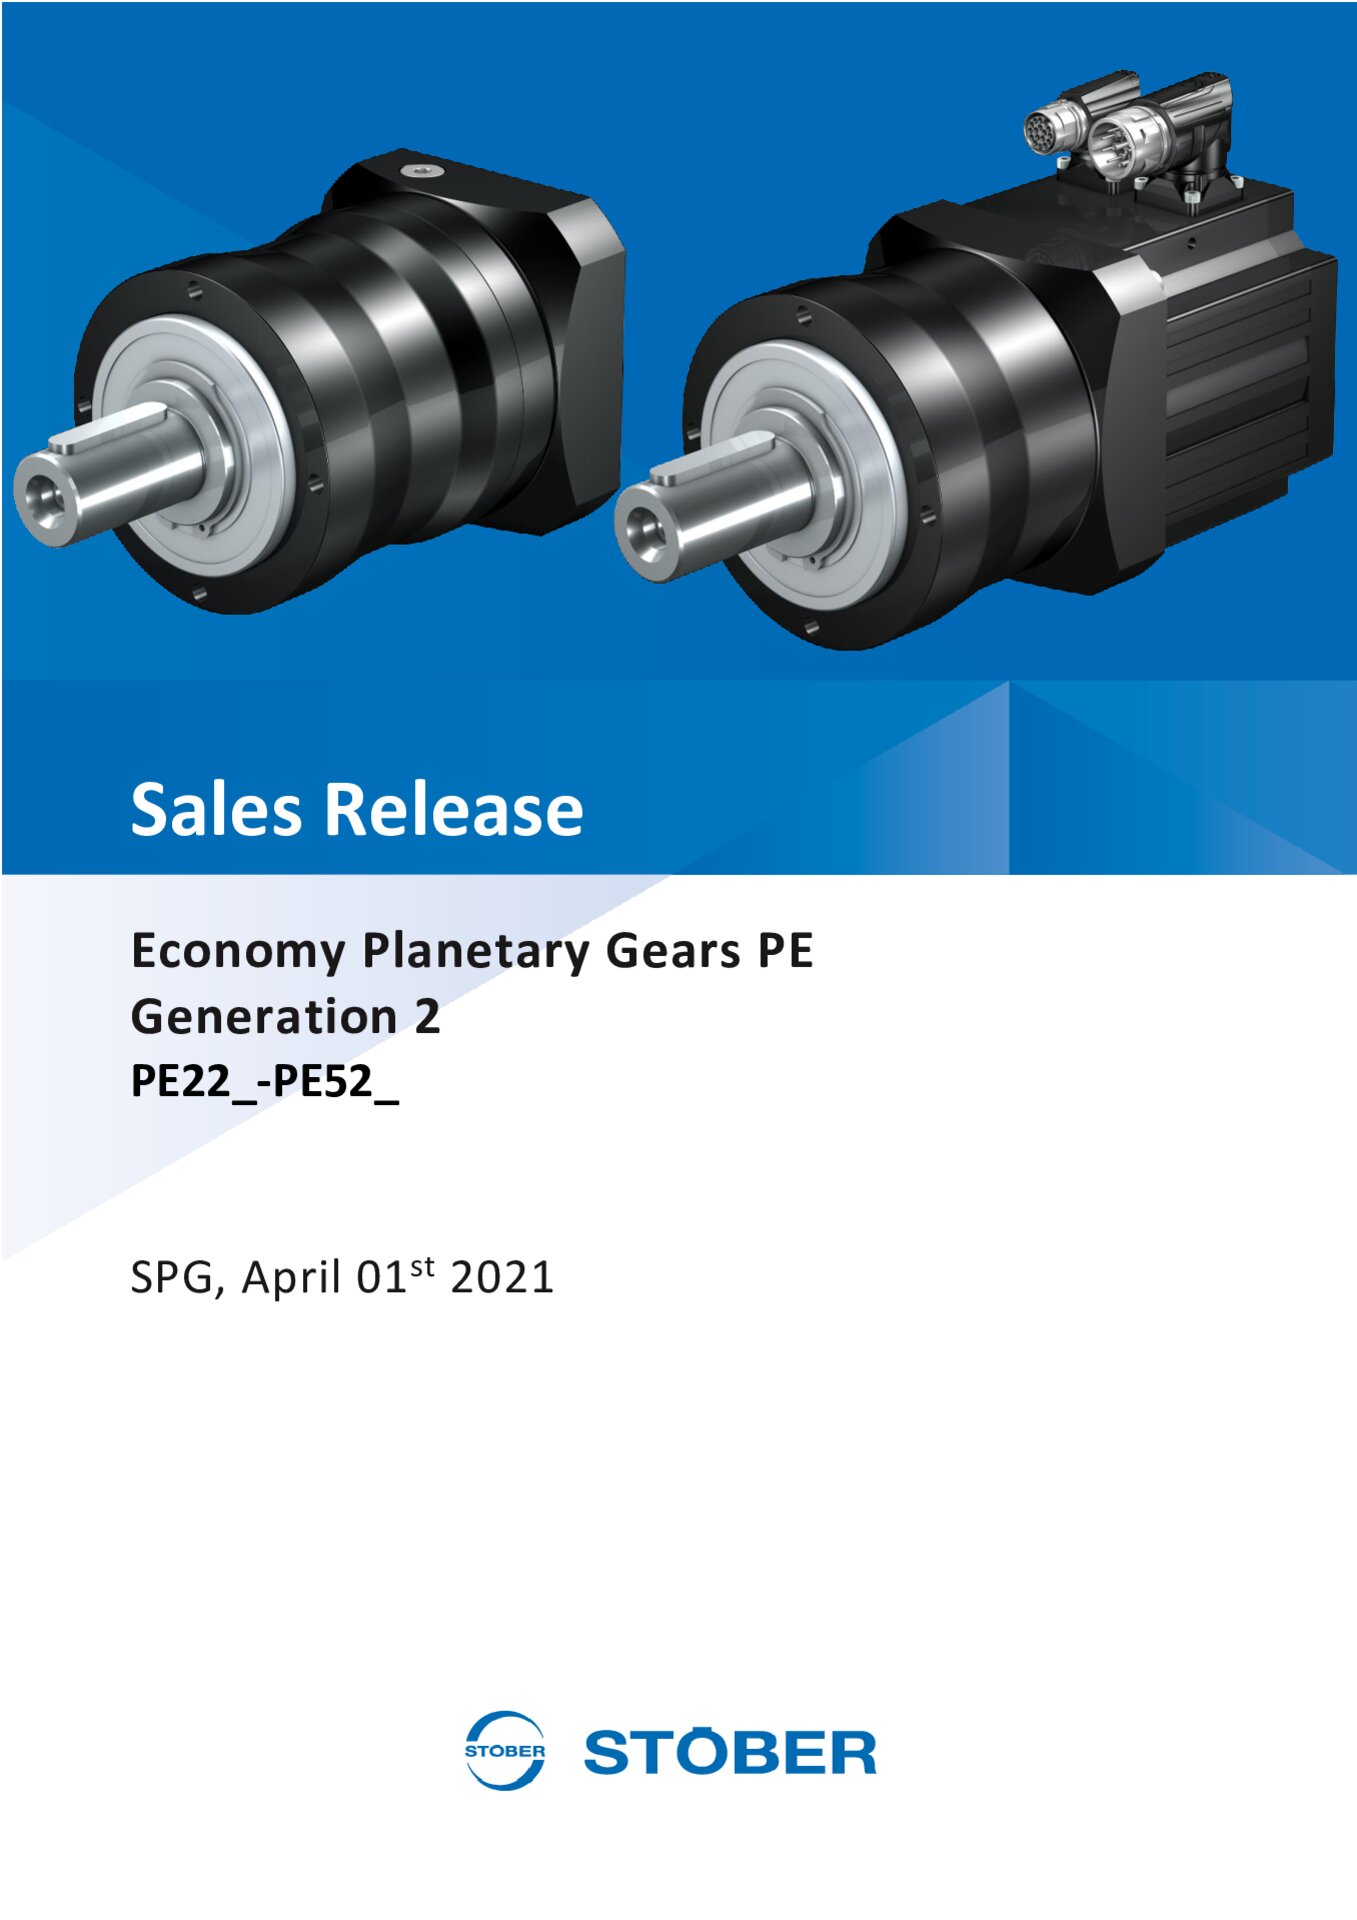 Sales Release Economy Planetary Gears PE Generation 2